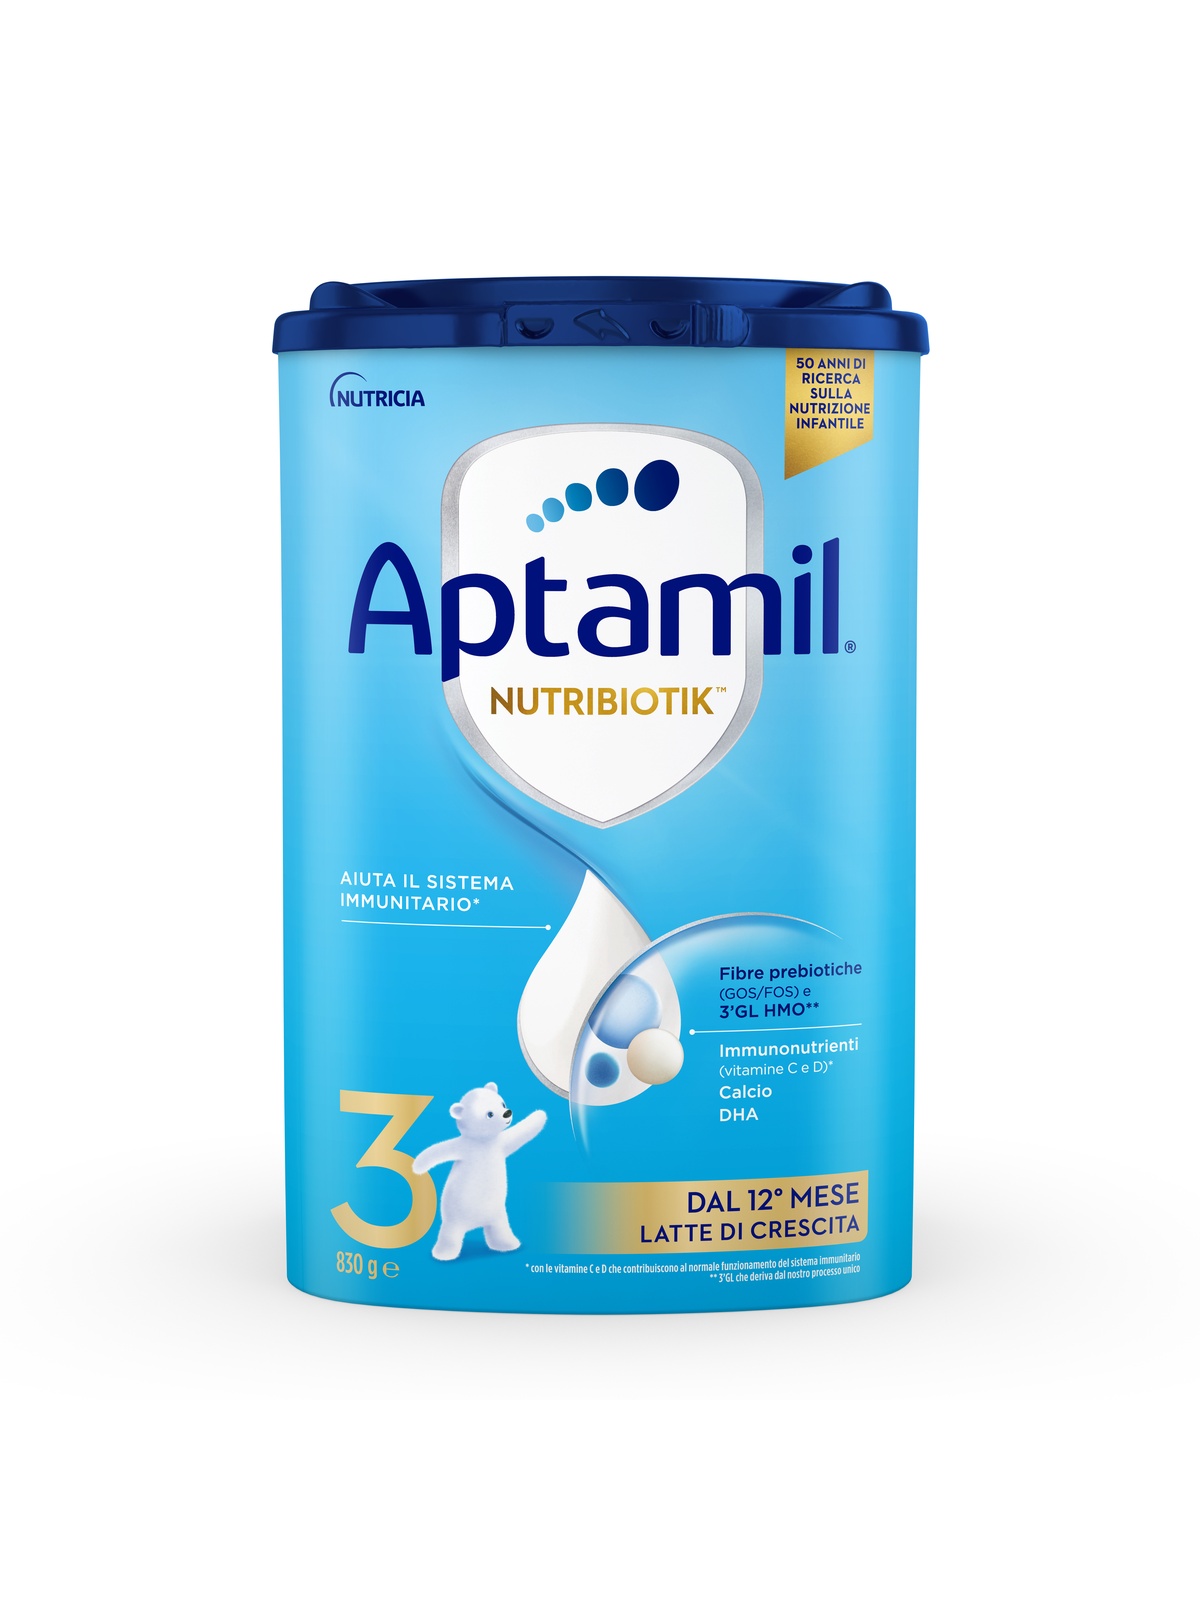 Aptamil nutribiotik 3 - latte di crescita in polvere per bambini dal 12° mese compiuto - 830g - Aptamil